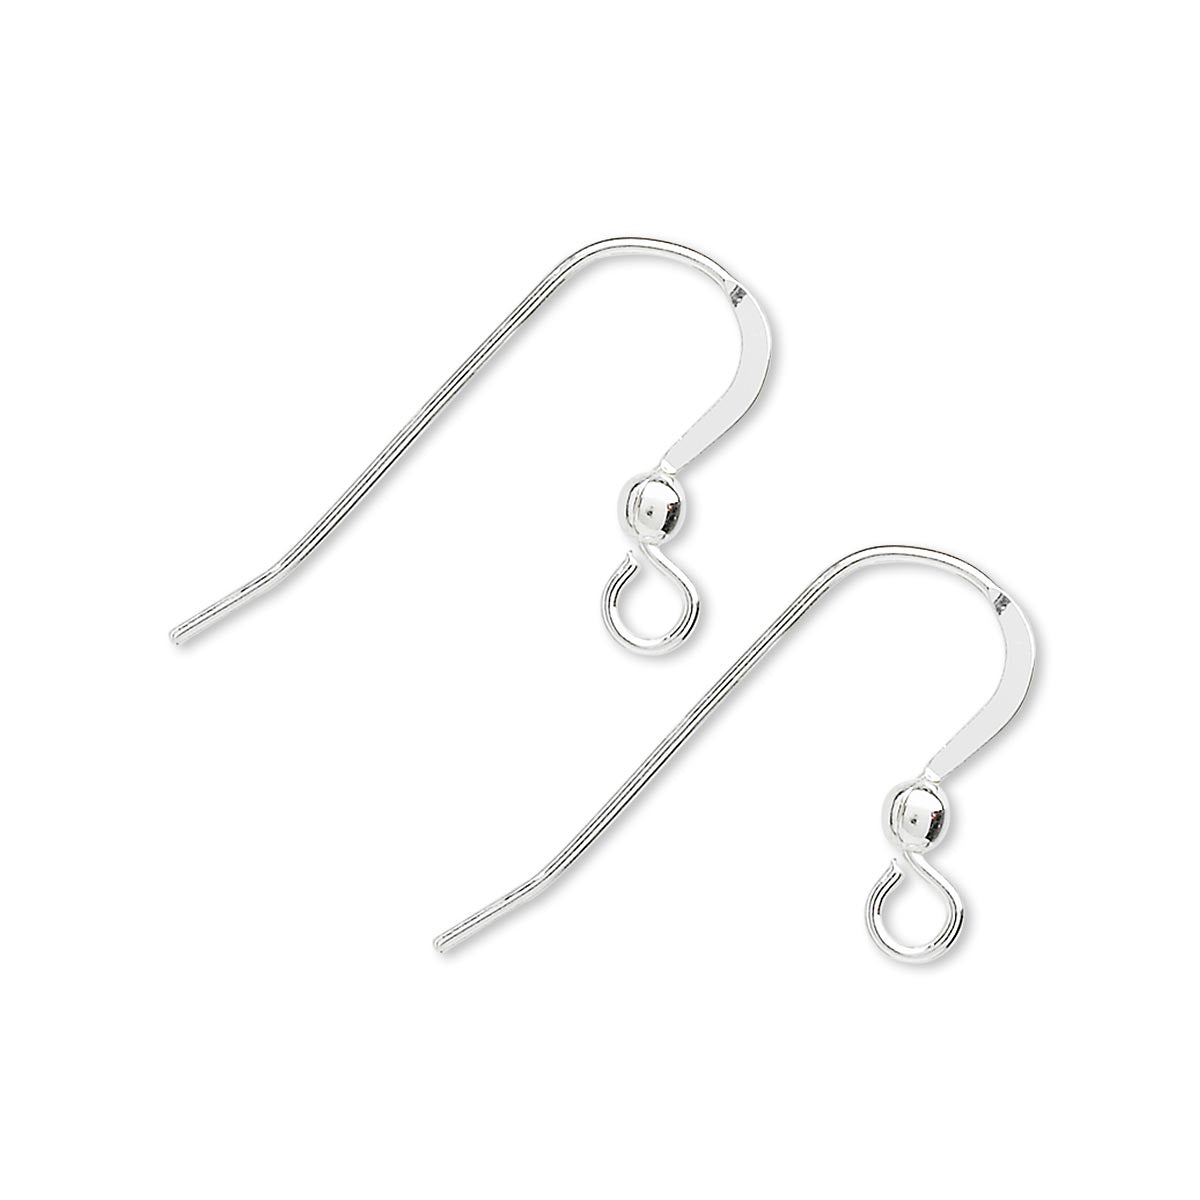 10 Sterling Silver Fish Hook Earrings Wire Wrapping 22 Gauge